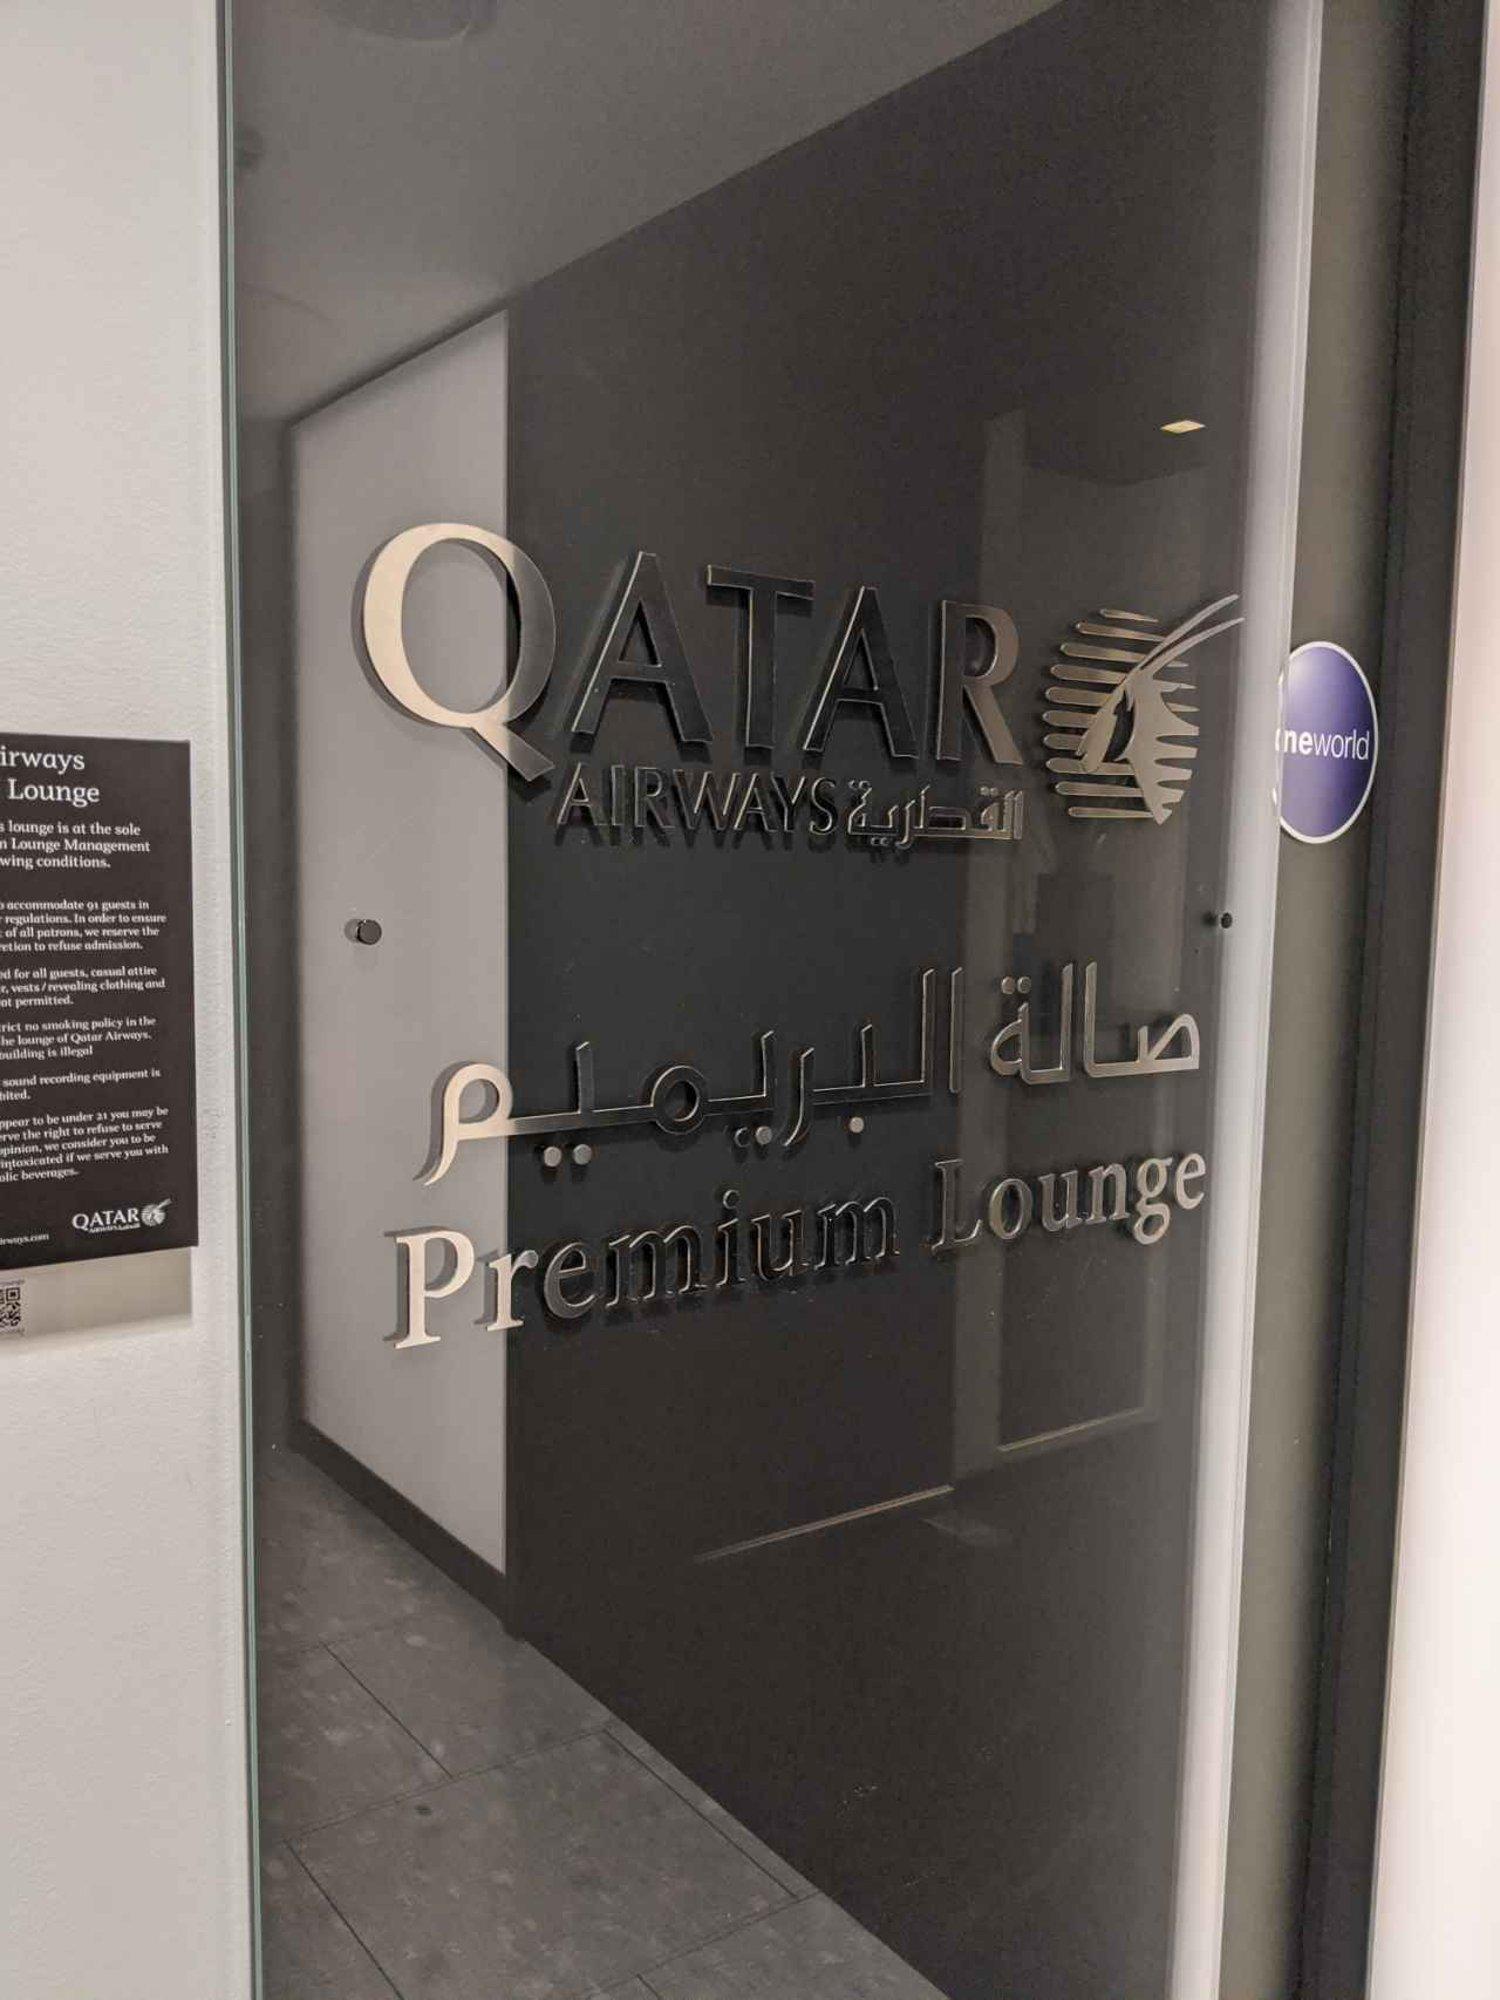 Qatar Airways Premium Lounge image 3 of 4